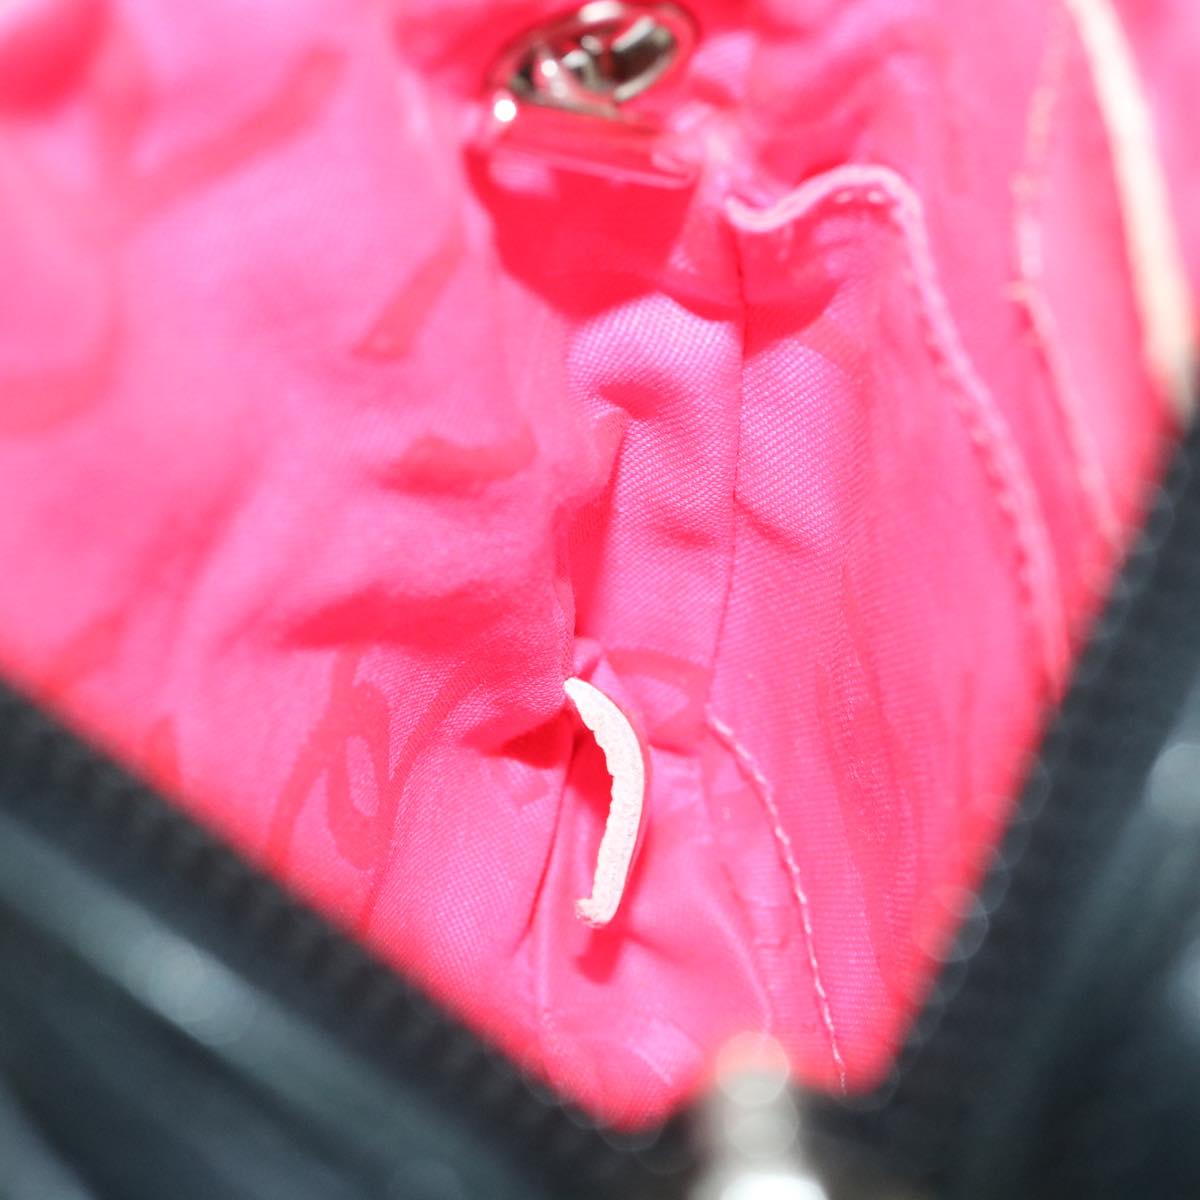 CHANEL Cambon Line Shoulder Bag Leather Black Pink CC Auth am3383